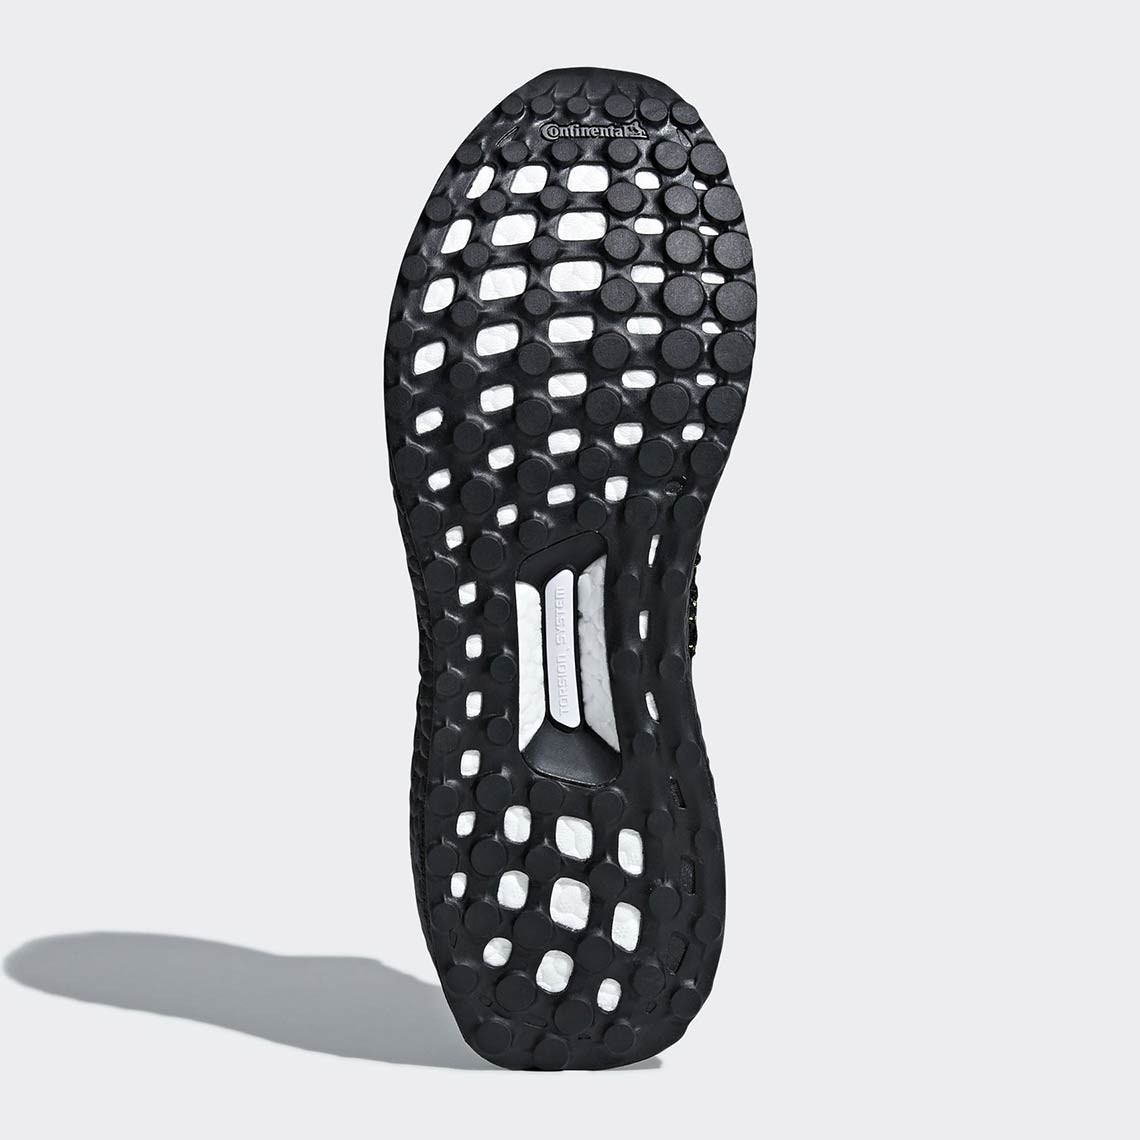 Ruddy Ruin Stun cherrichella shoes sandals - Adidas UltraBoost Clima Core Black Solar Red  Running Shoes AQ0482 - StclaircomoShops